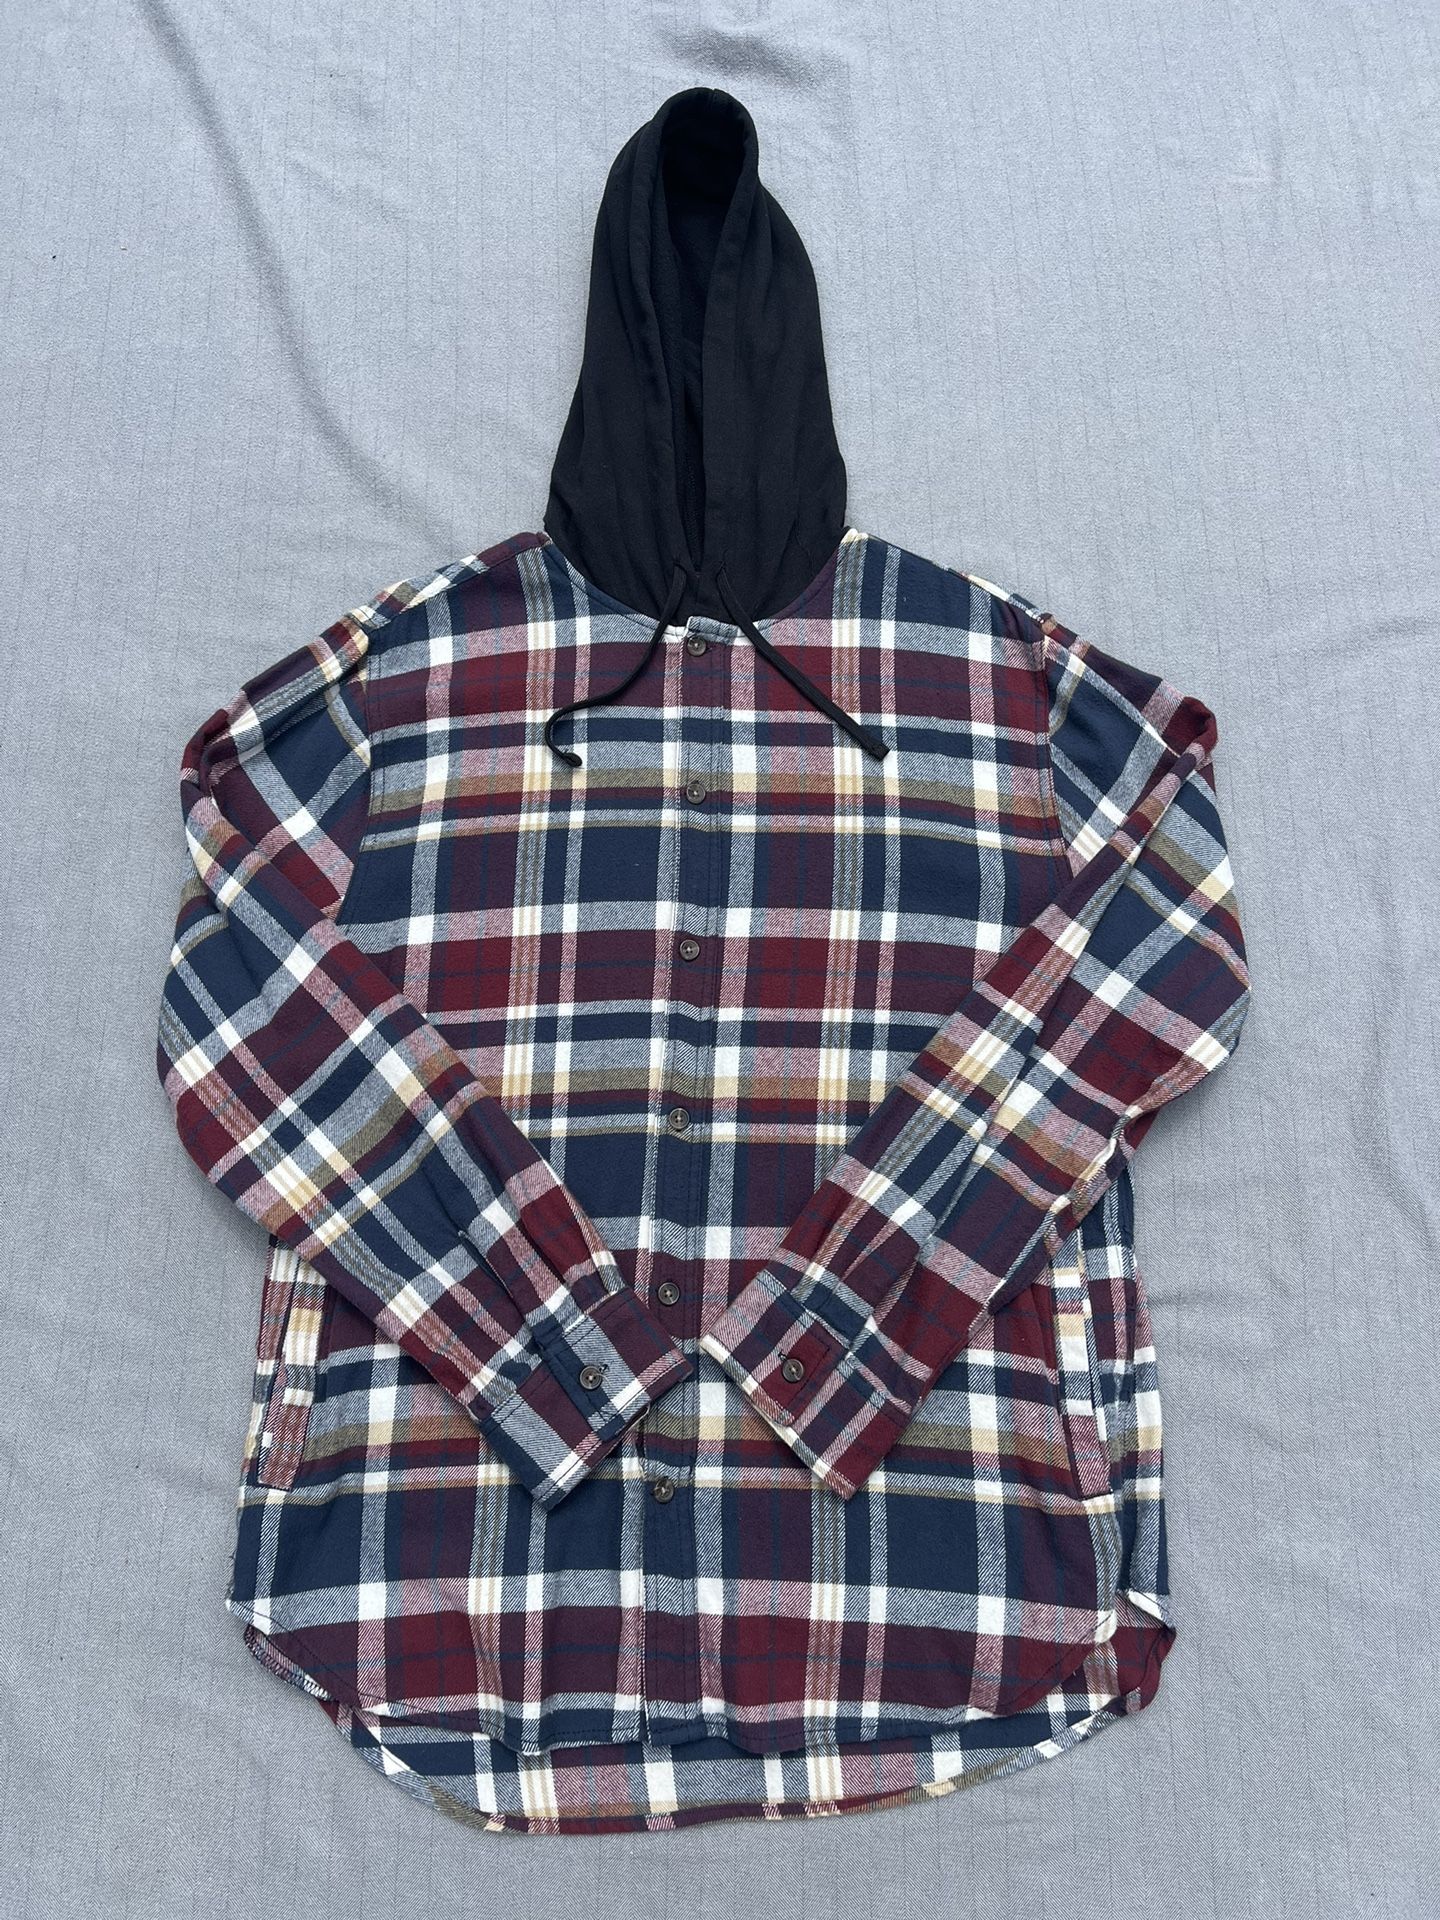 Pacsun Plaid Striped Button Down Flannel With Black Hoodie Mens M Vintage Y2K